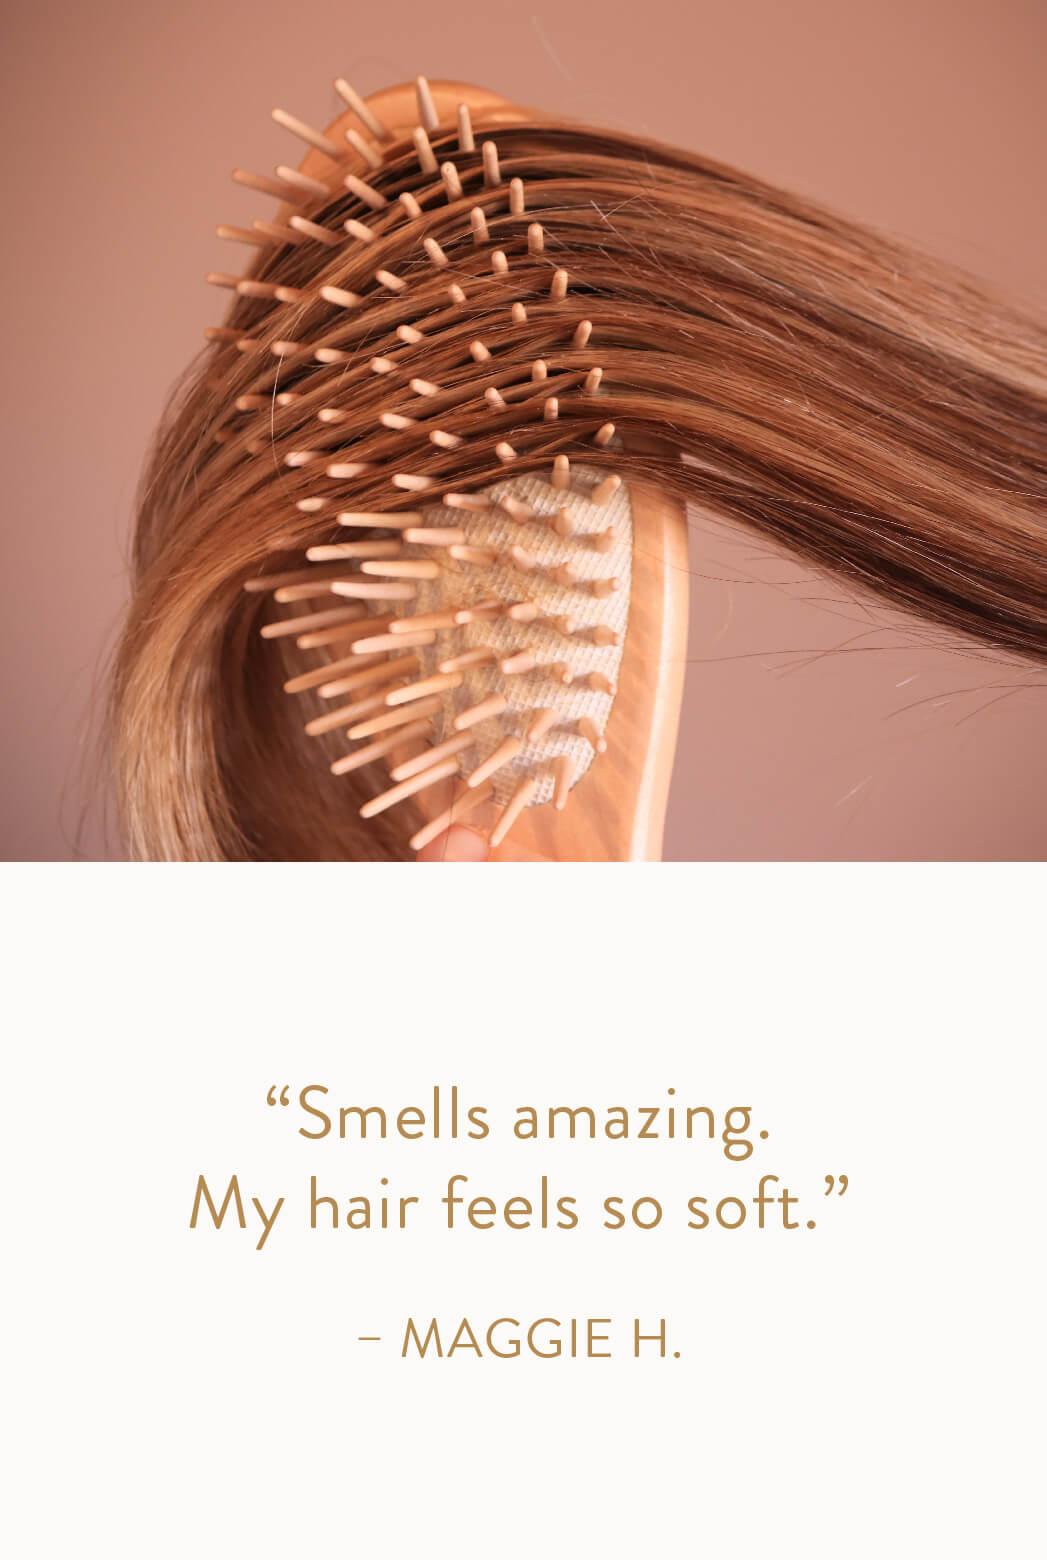 "Smells amazing. My hair feels so soft." - Maggie H.